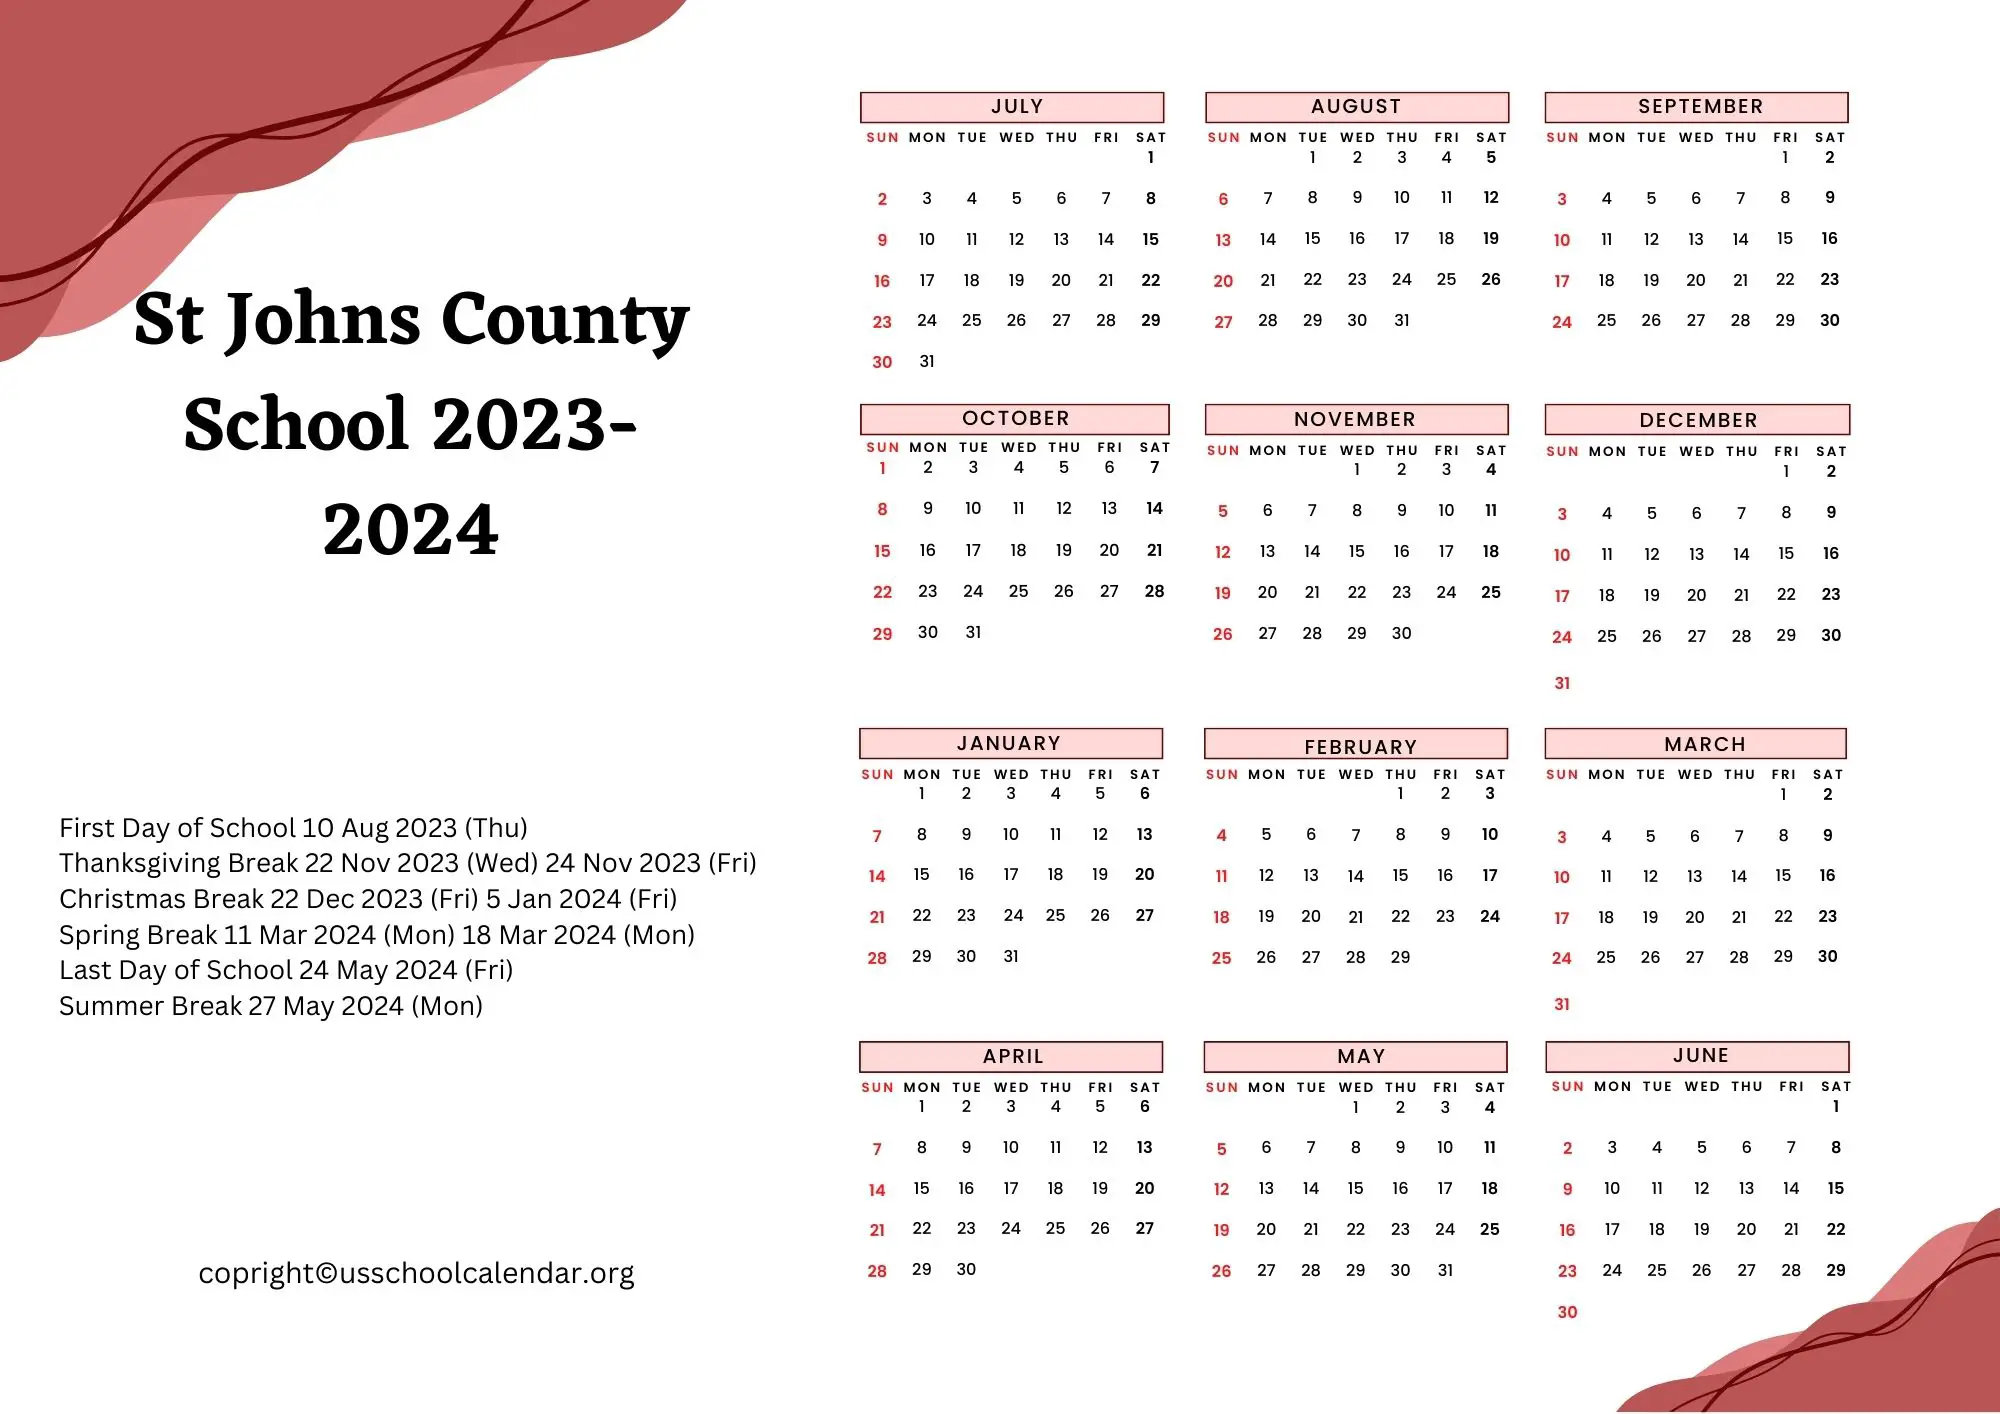 St Johns County School Calendar with Holidays 2023 2024